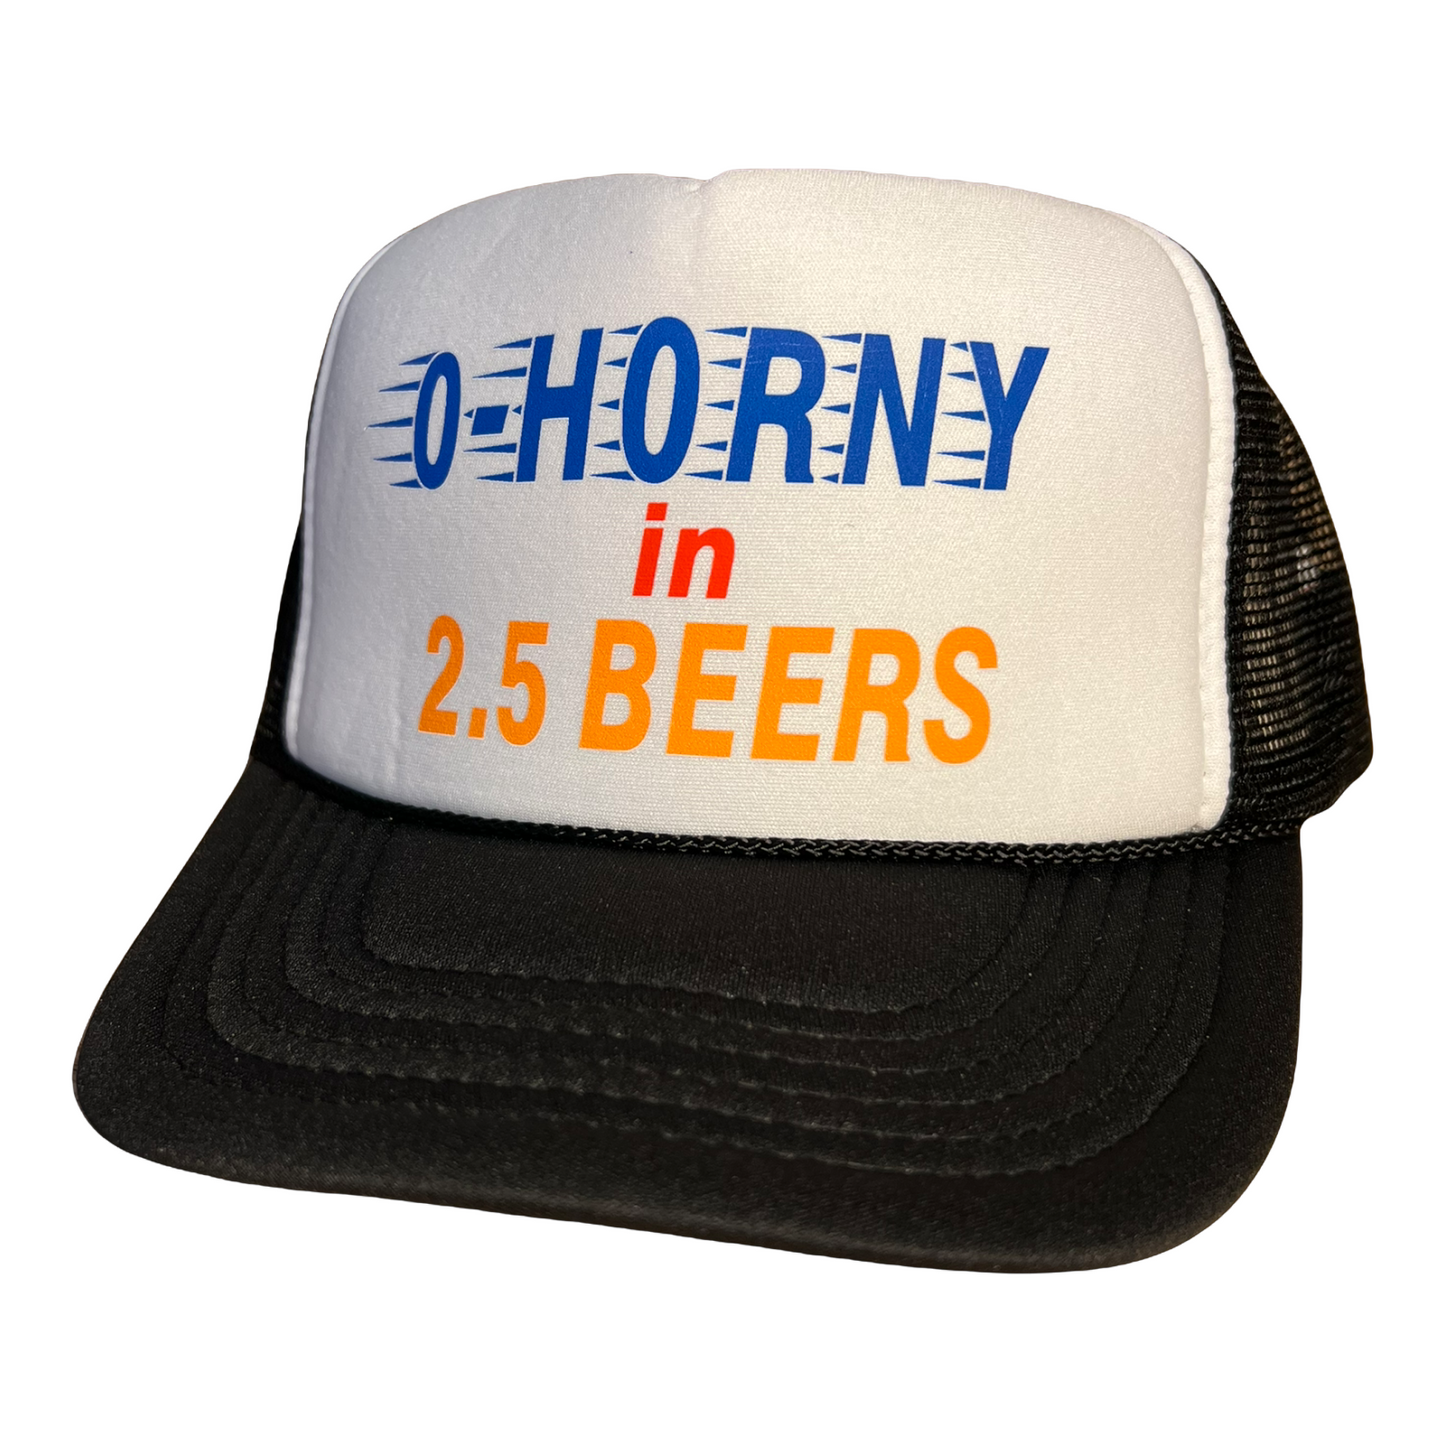 0- Horny In 2.5 beers Trucker Hat Funny Trucker Hat Black/White